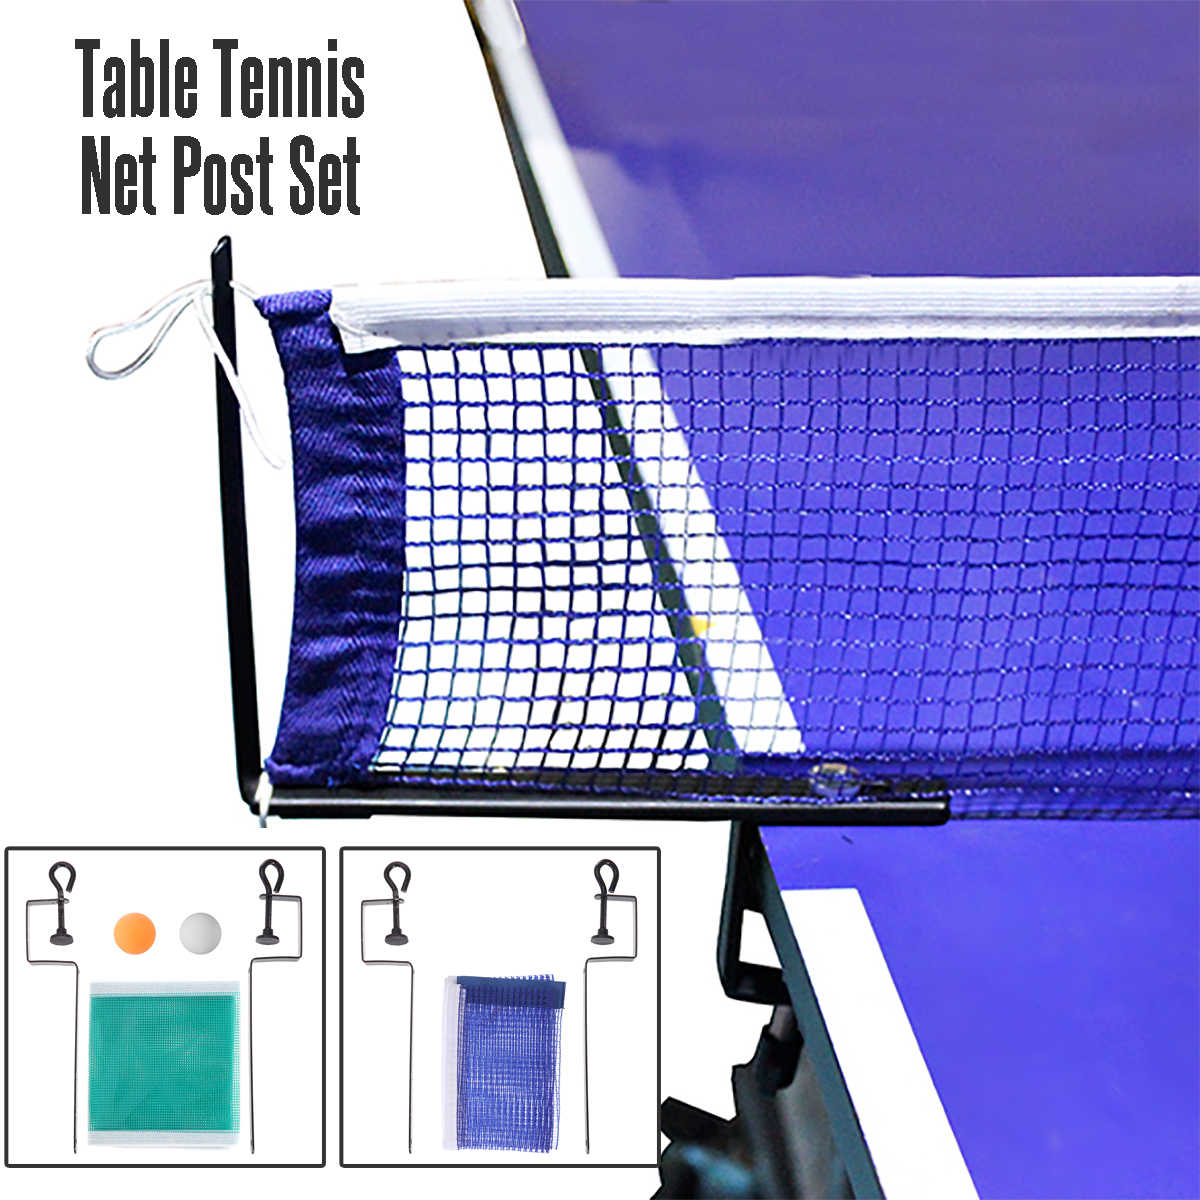 Table-Tennis-Net-Ping-Pong-Ball-Fix-Equipment-Portable-Training-Sport-Outdoor-1739025-1